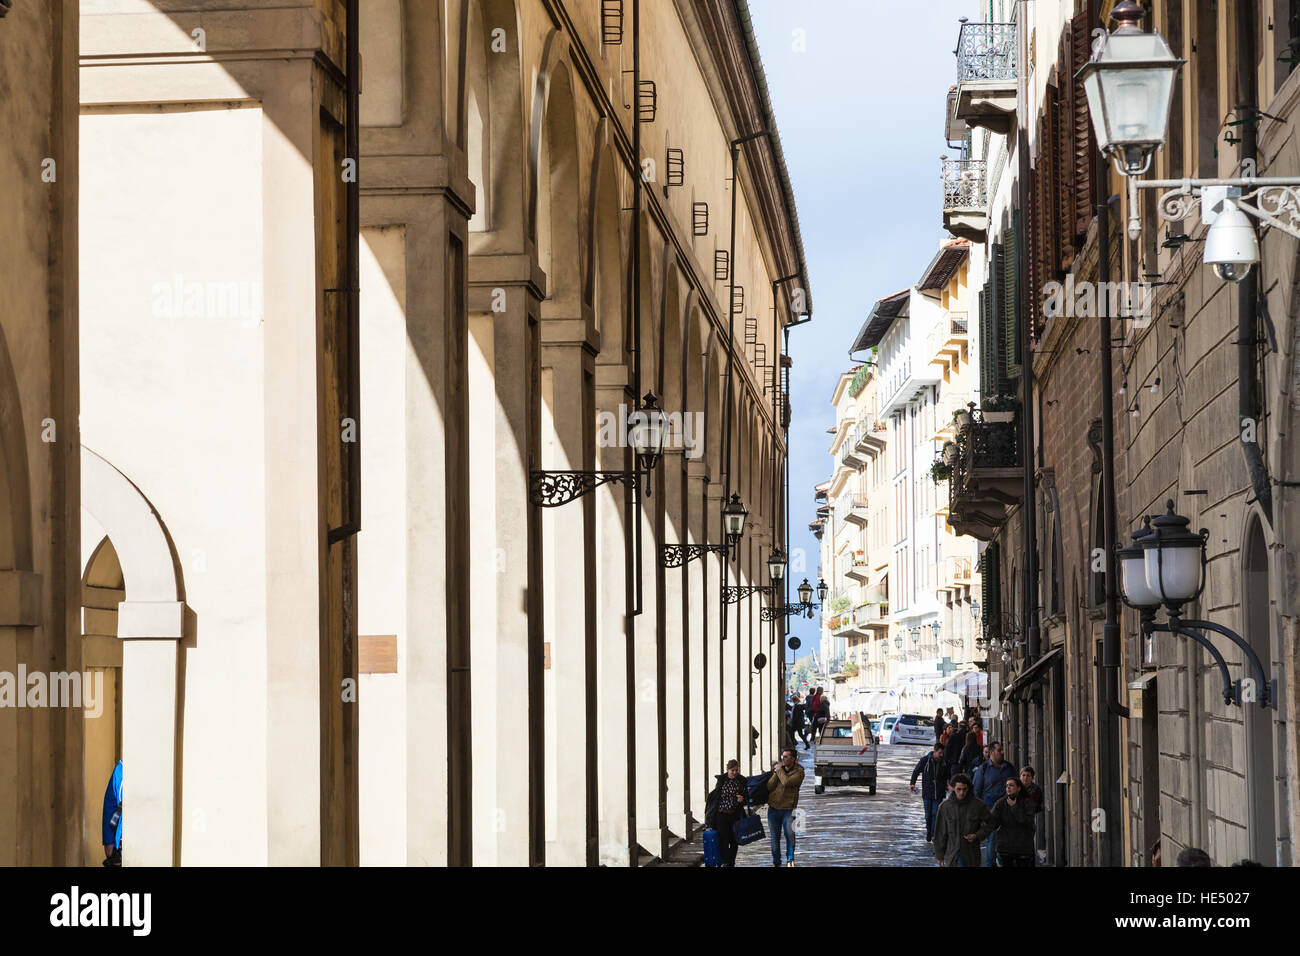 FLORENCE, ITALY - NOVEMBER 6, 2016: people walk near Vasari Corridor in autumn. The Vasari Corridor connects Palazzo Vecchio with Palazzo Pitti, it wa Stock Photo